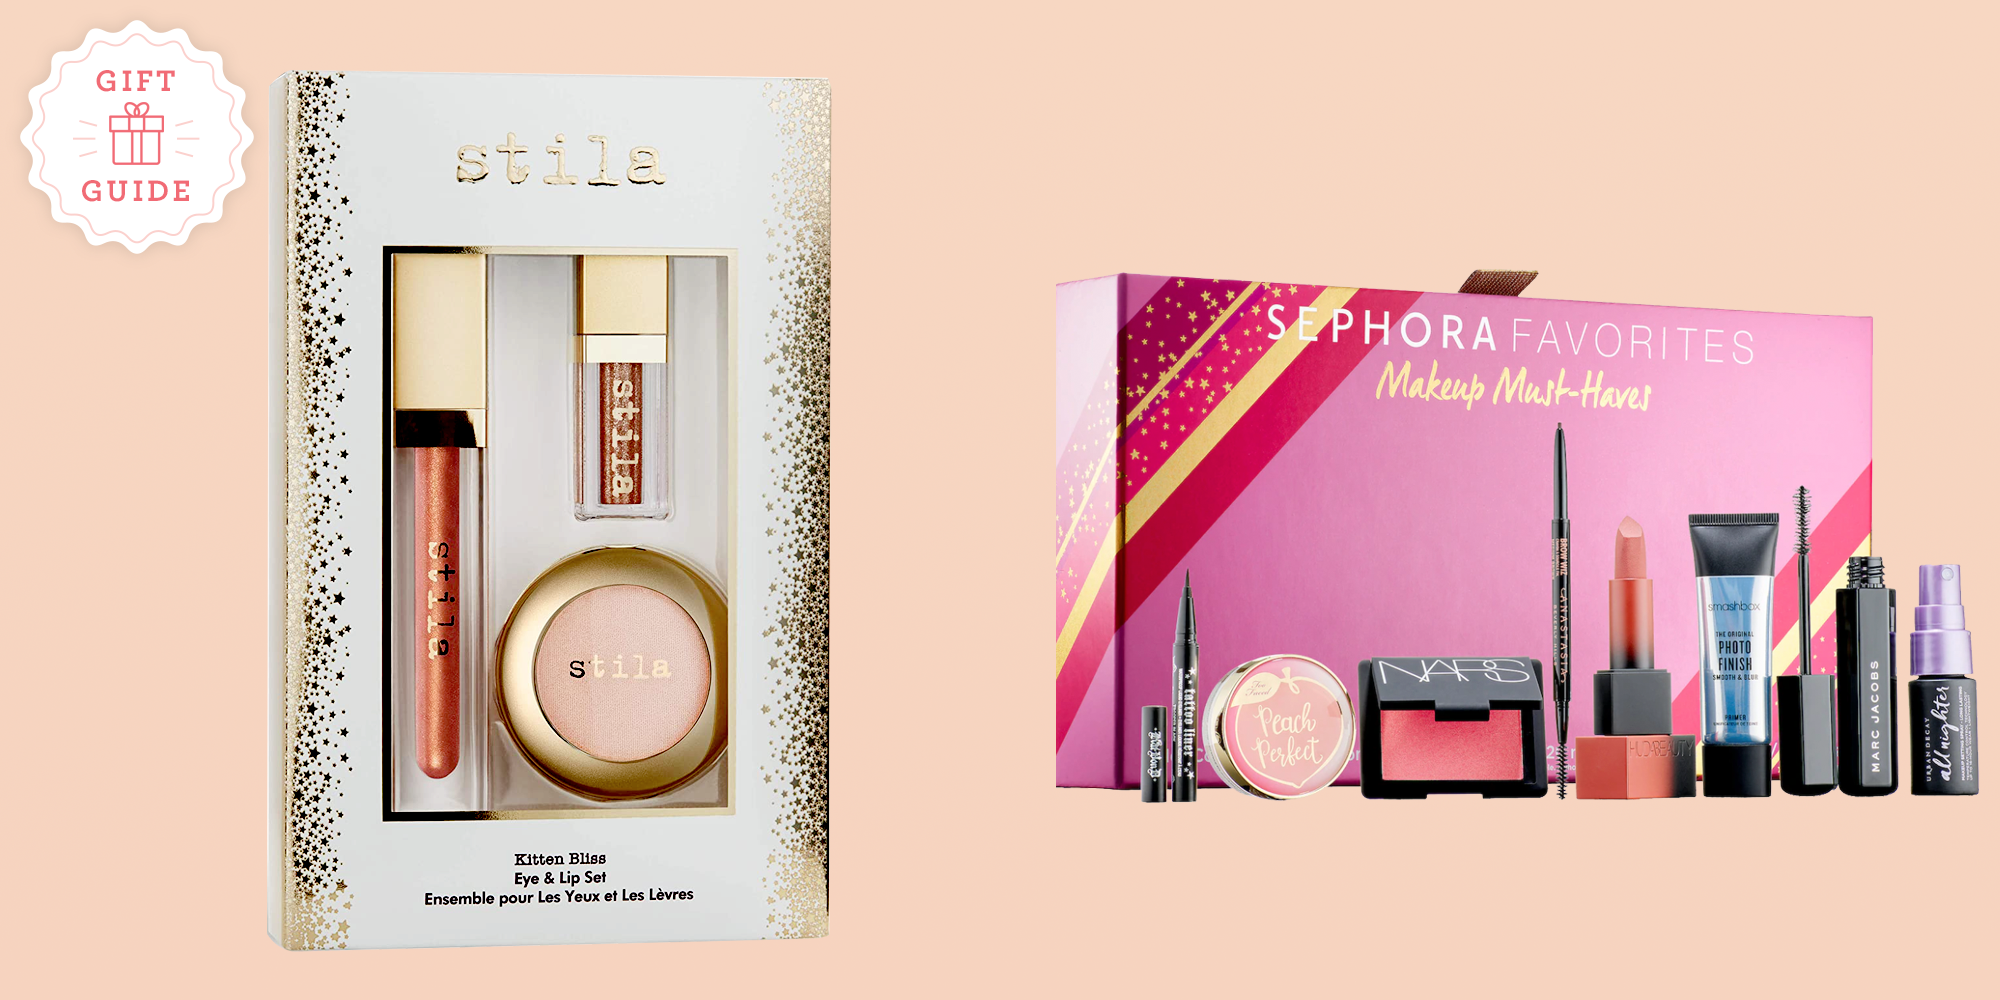 vanter bede Tredive 12 Best Makeup Gift Sets 2022 - Top Beauty Gift Set Ideas for Her